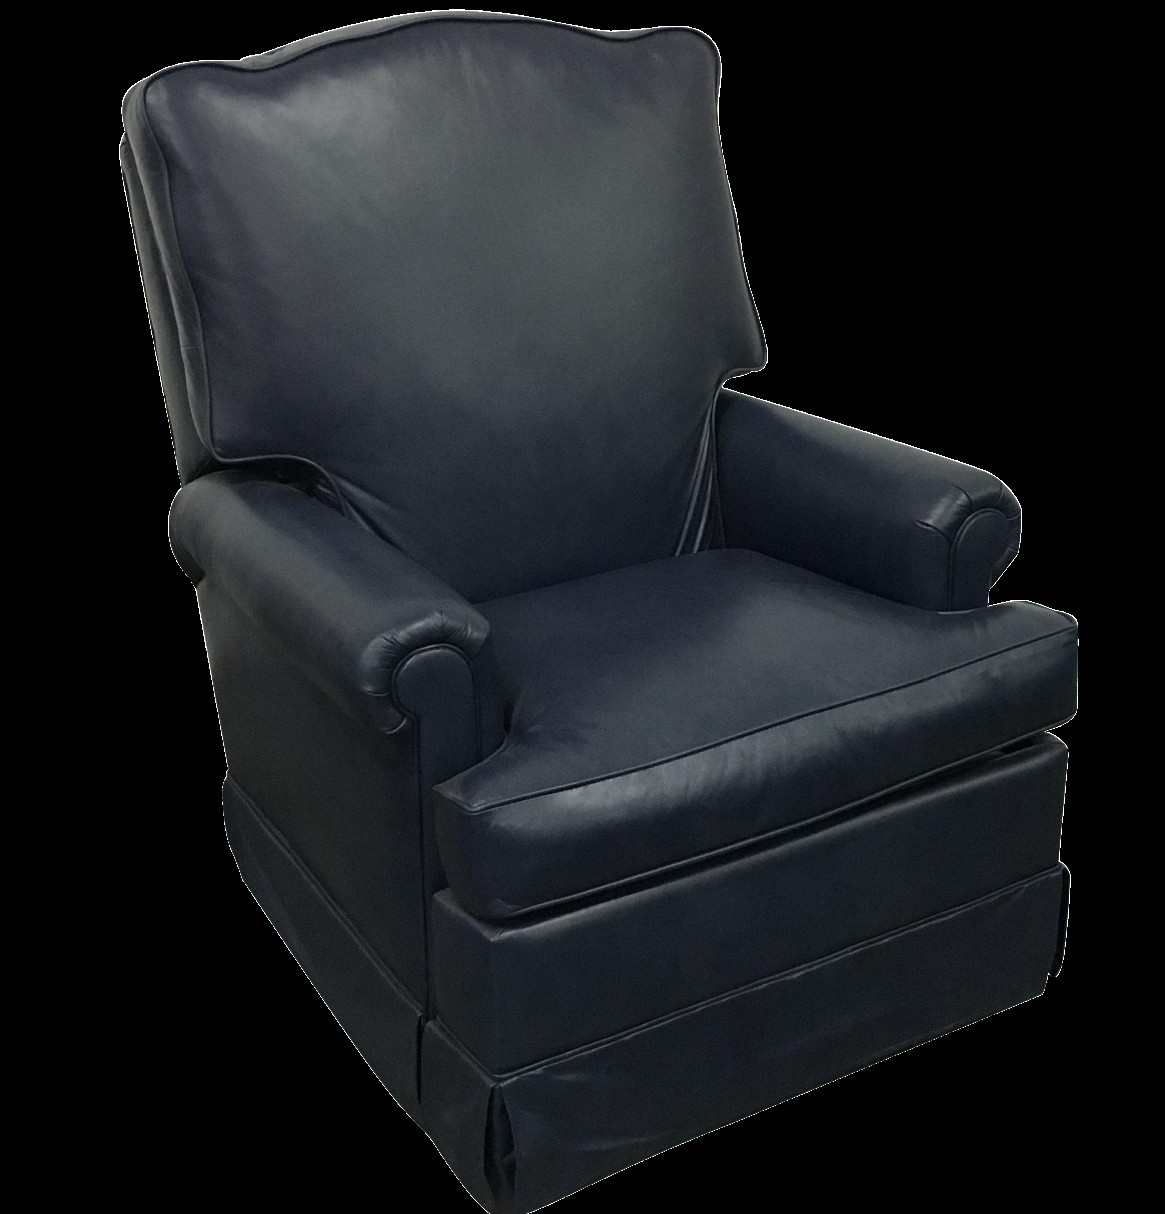 Navy blue swivel recliner by leathercraft chairish